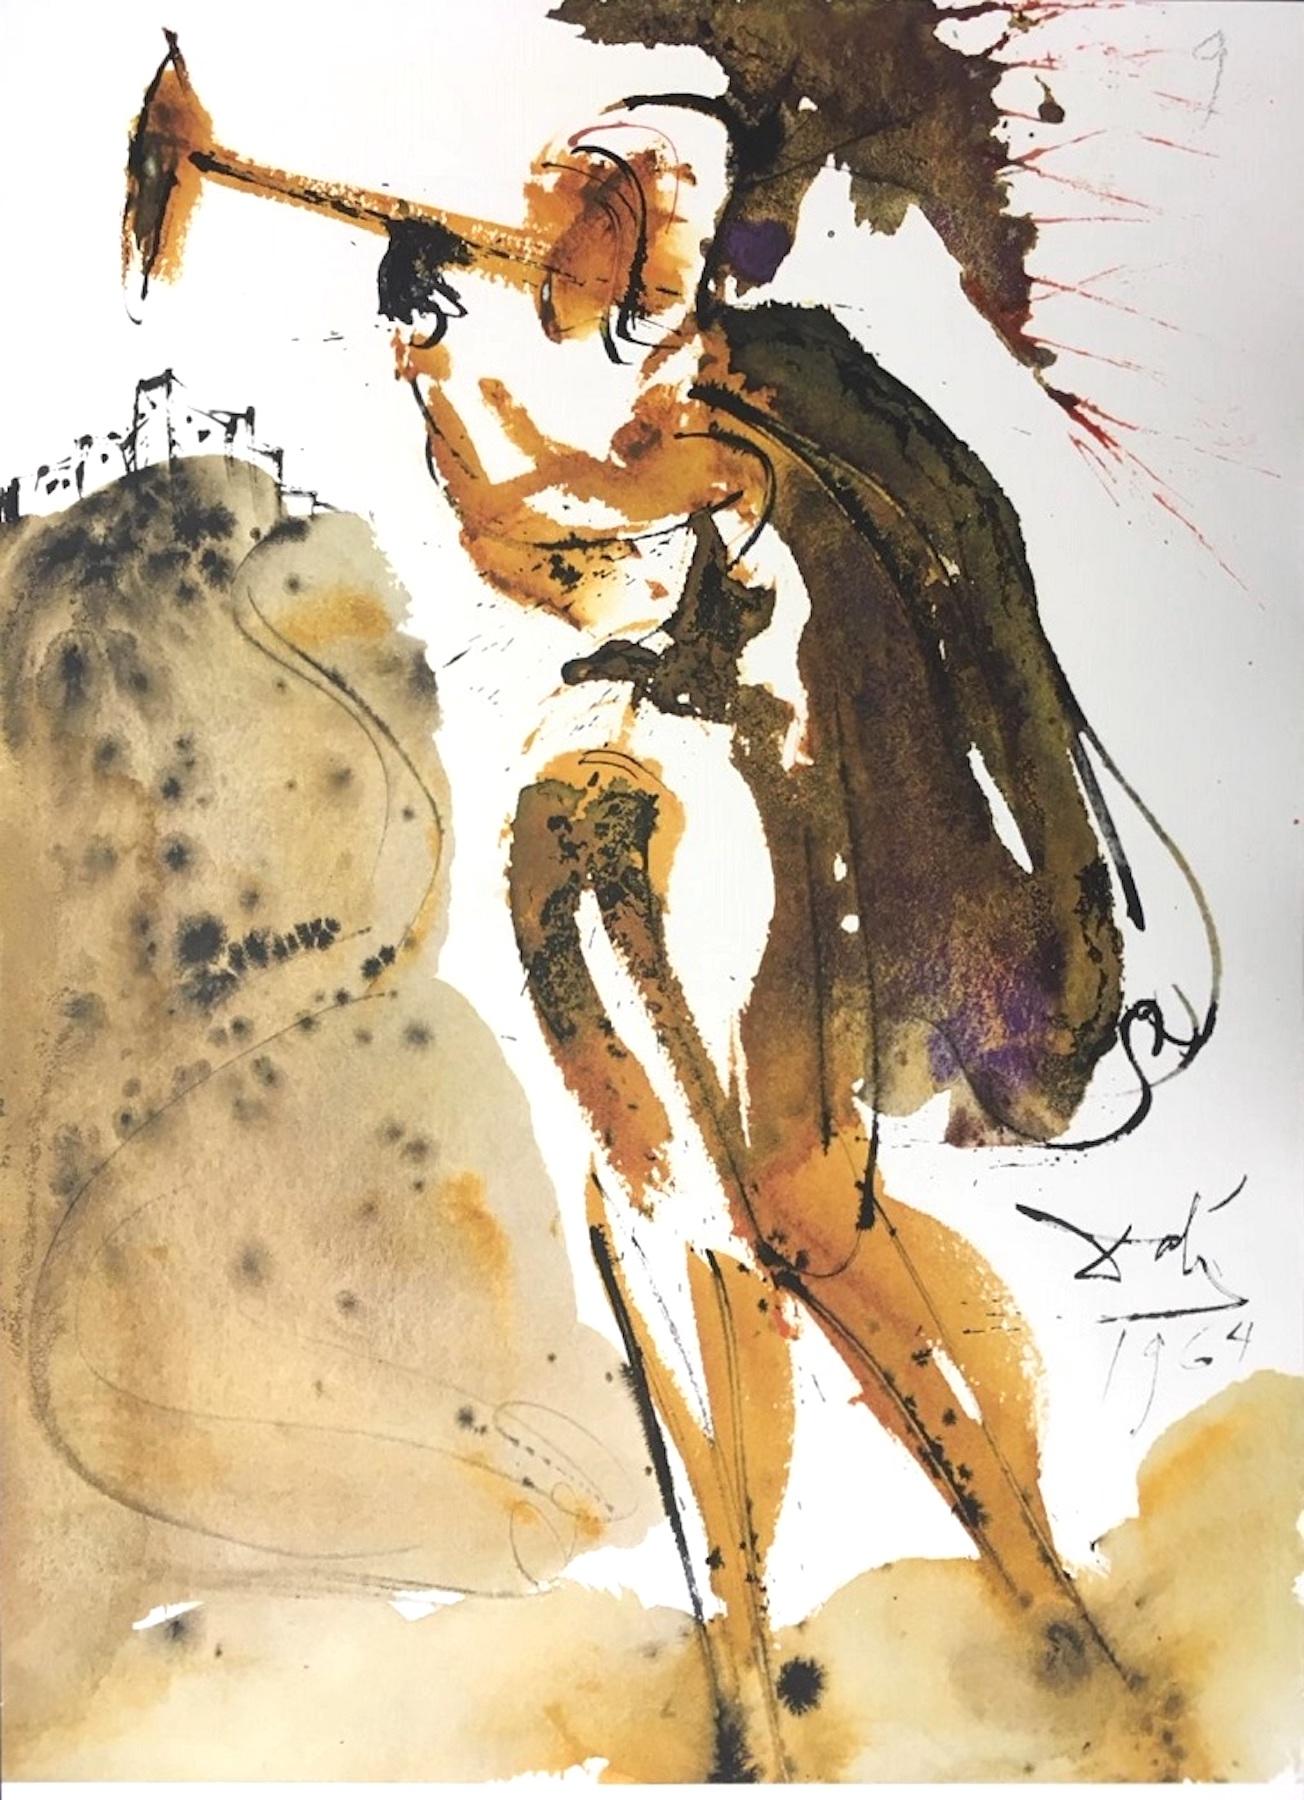 Salvador Dalí Print - Canite Tuba in Sion - Original Lithographby S. Dalì - 1964